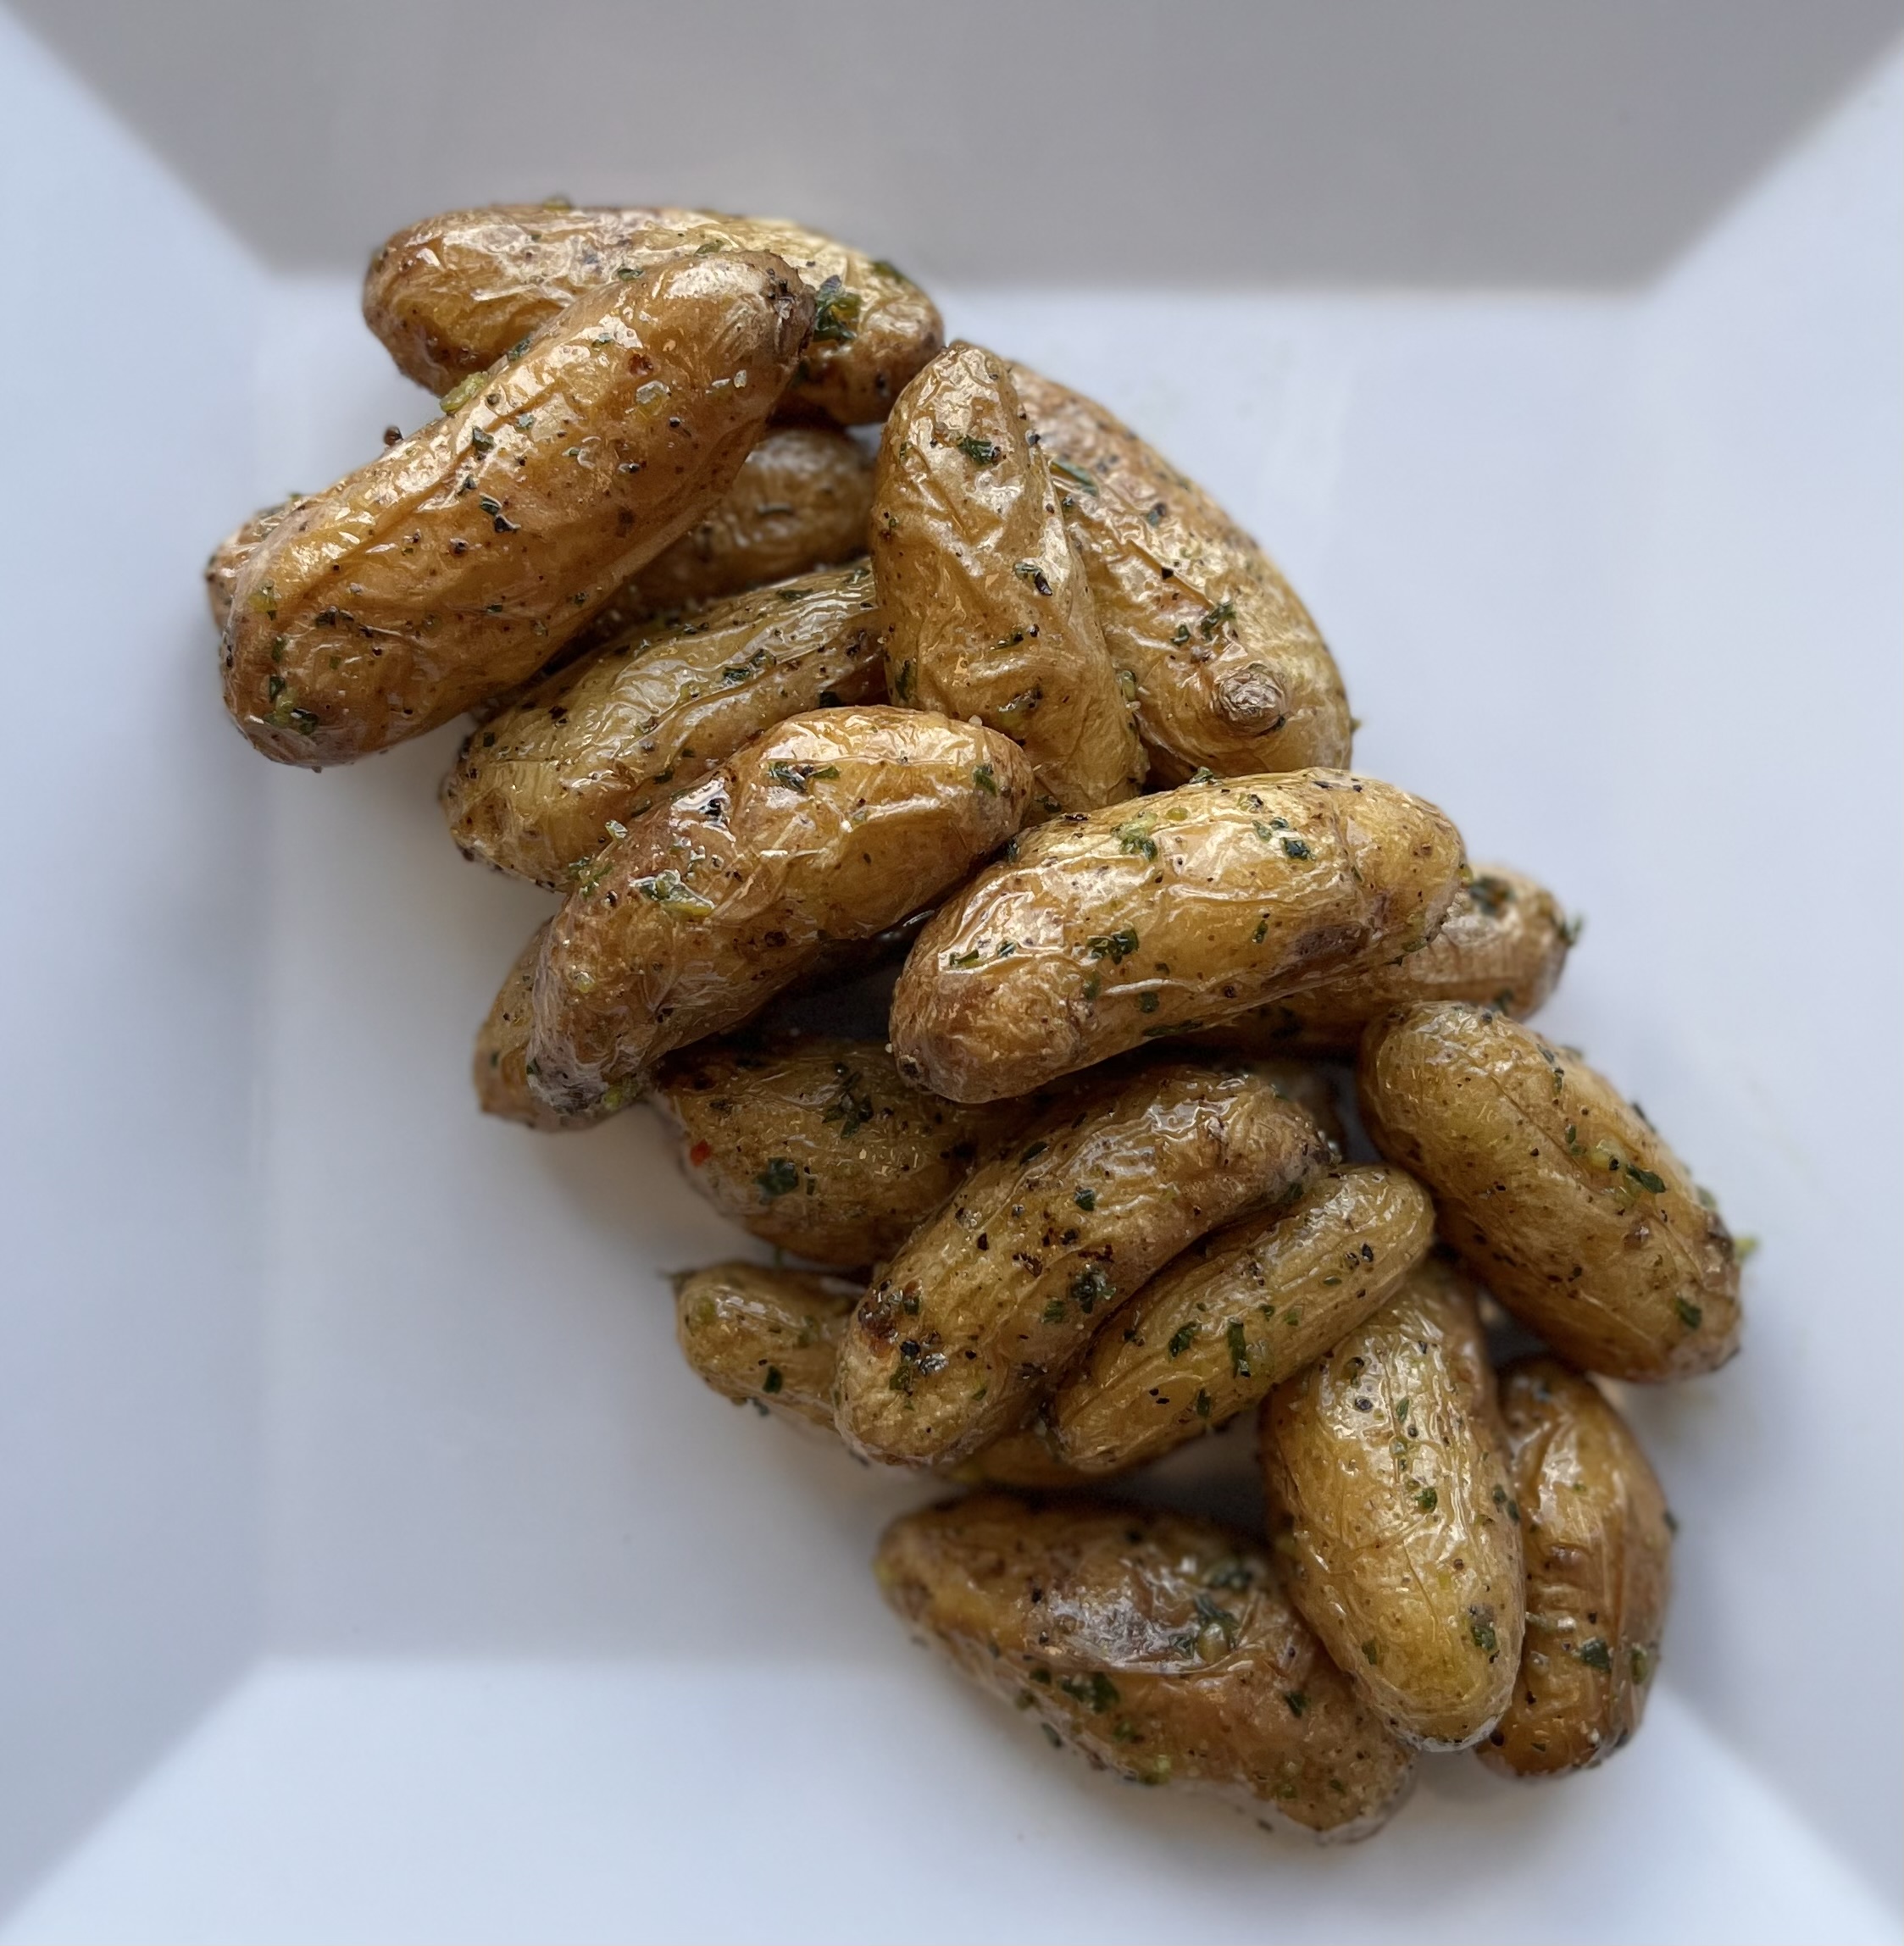 Noujaim's Bistro roasted fingerling potatoes